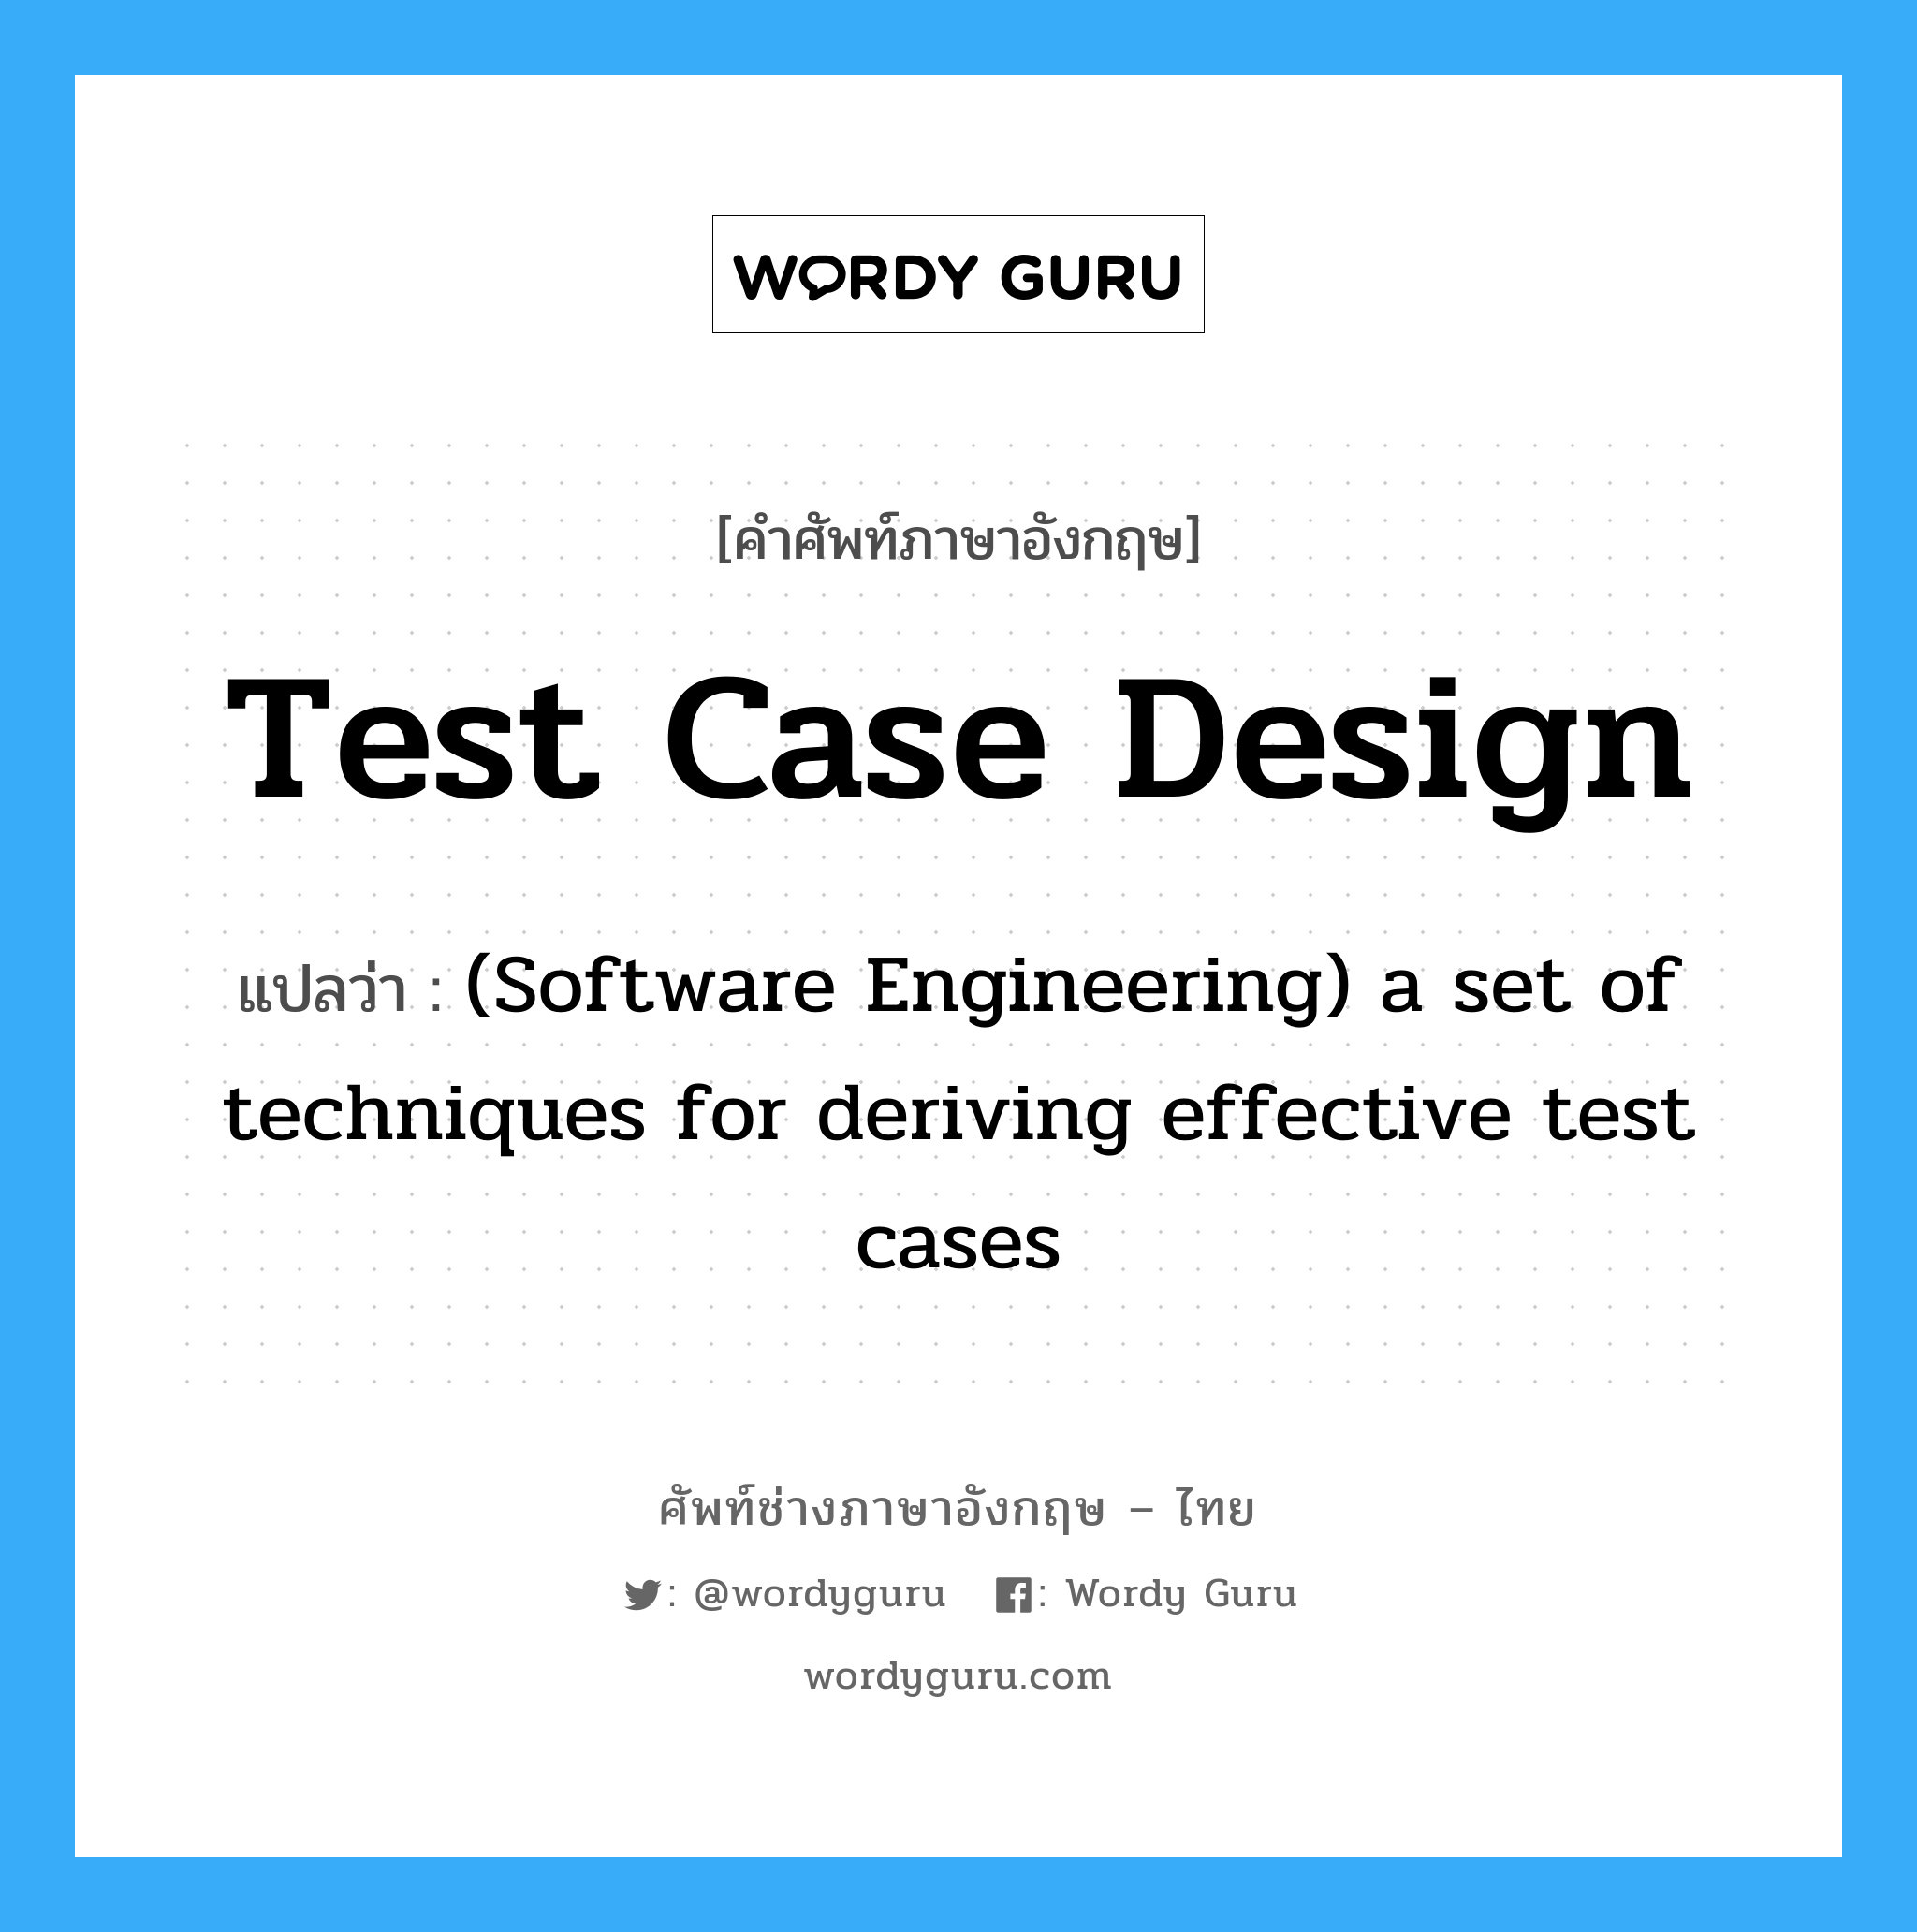 Test case design แปลว่า?, คำศัพท์ช่างภาษาอังกฤษ - ไทย Test case design คำศัพท์ภาษาอังกฤษ Test case design แปลว่า (Software Engineering) a set of techniques for deriving effective test cases